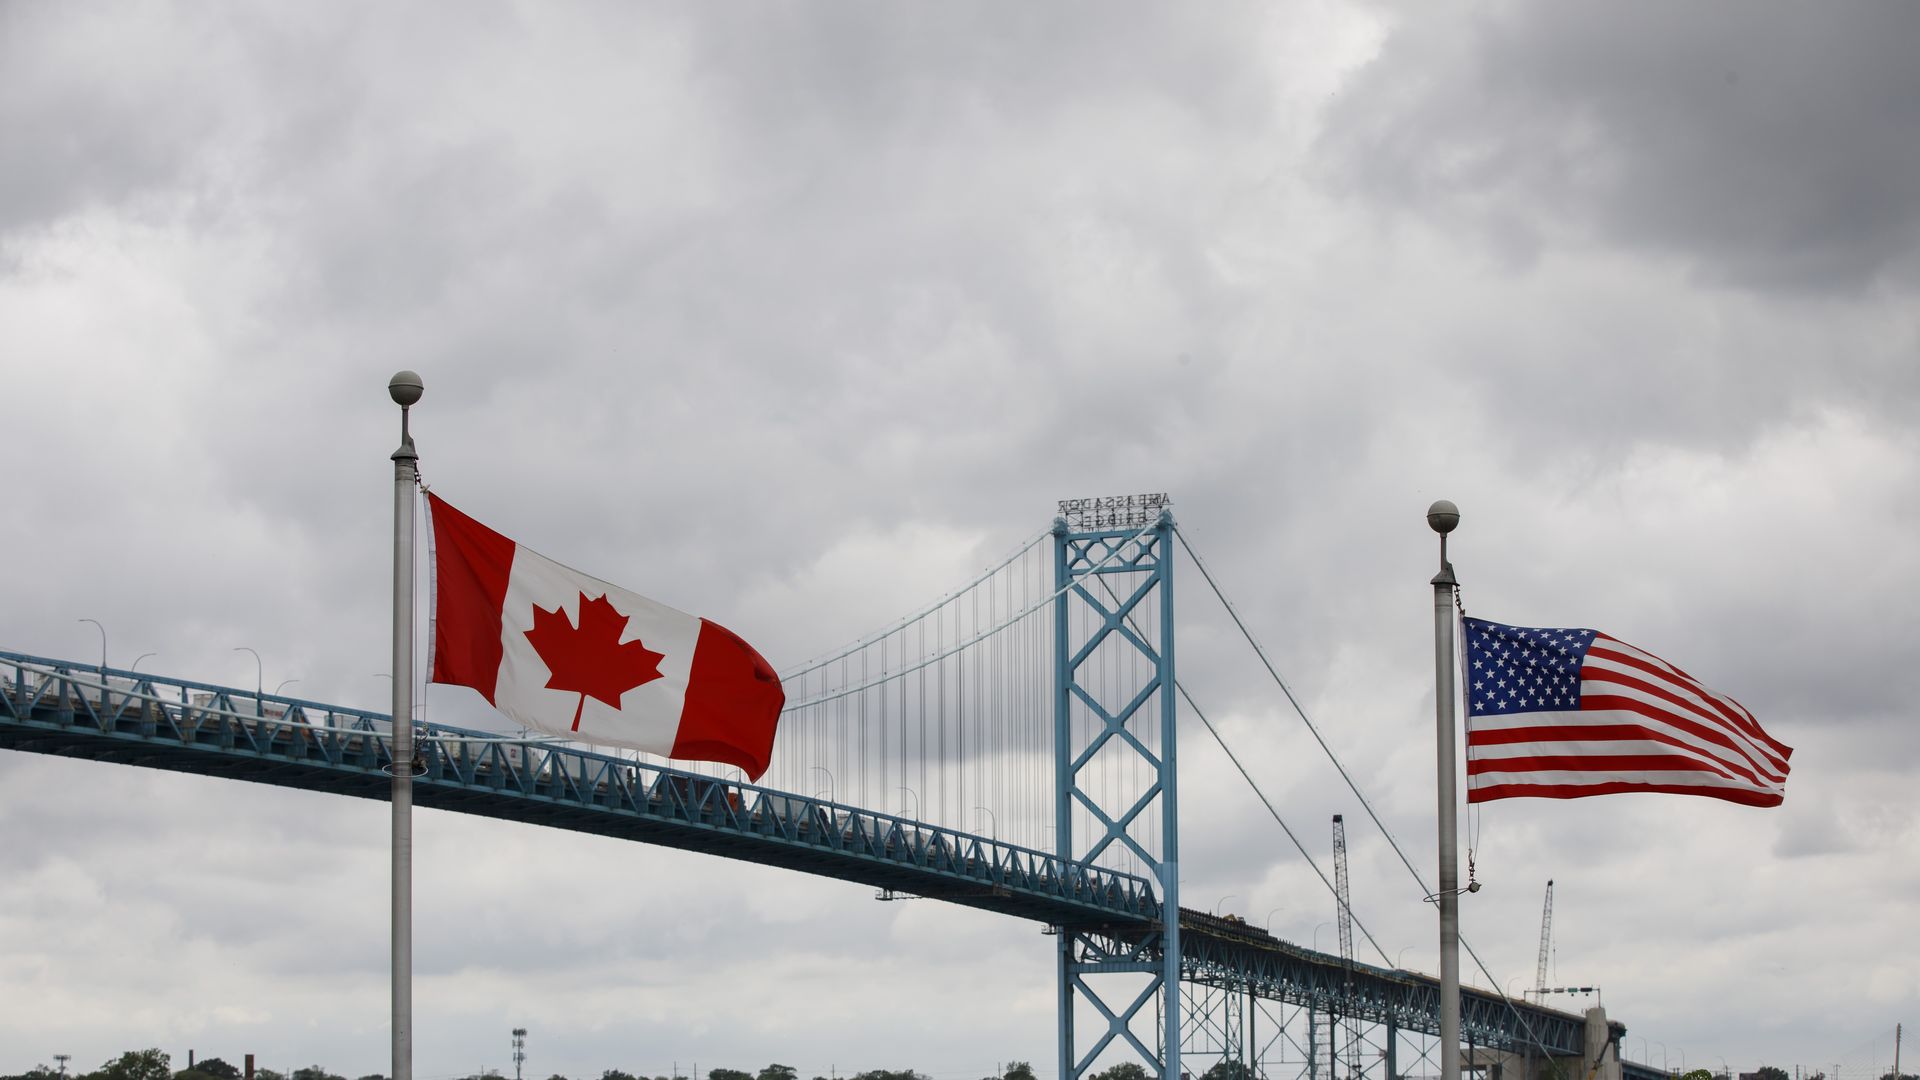 Ambassador Bridge connecting Canada to the U.S. in Windsor, Ontario, Canada